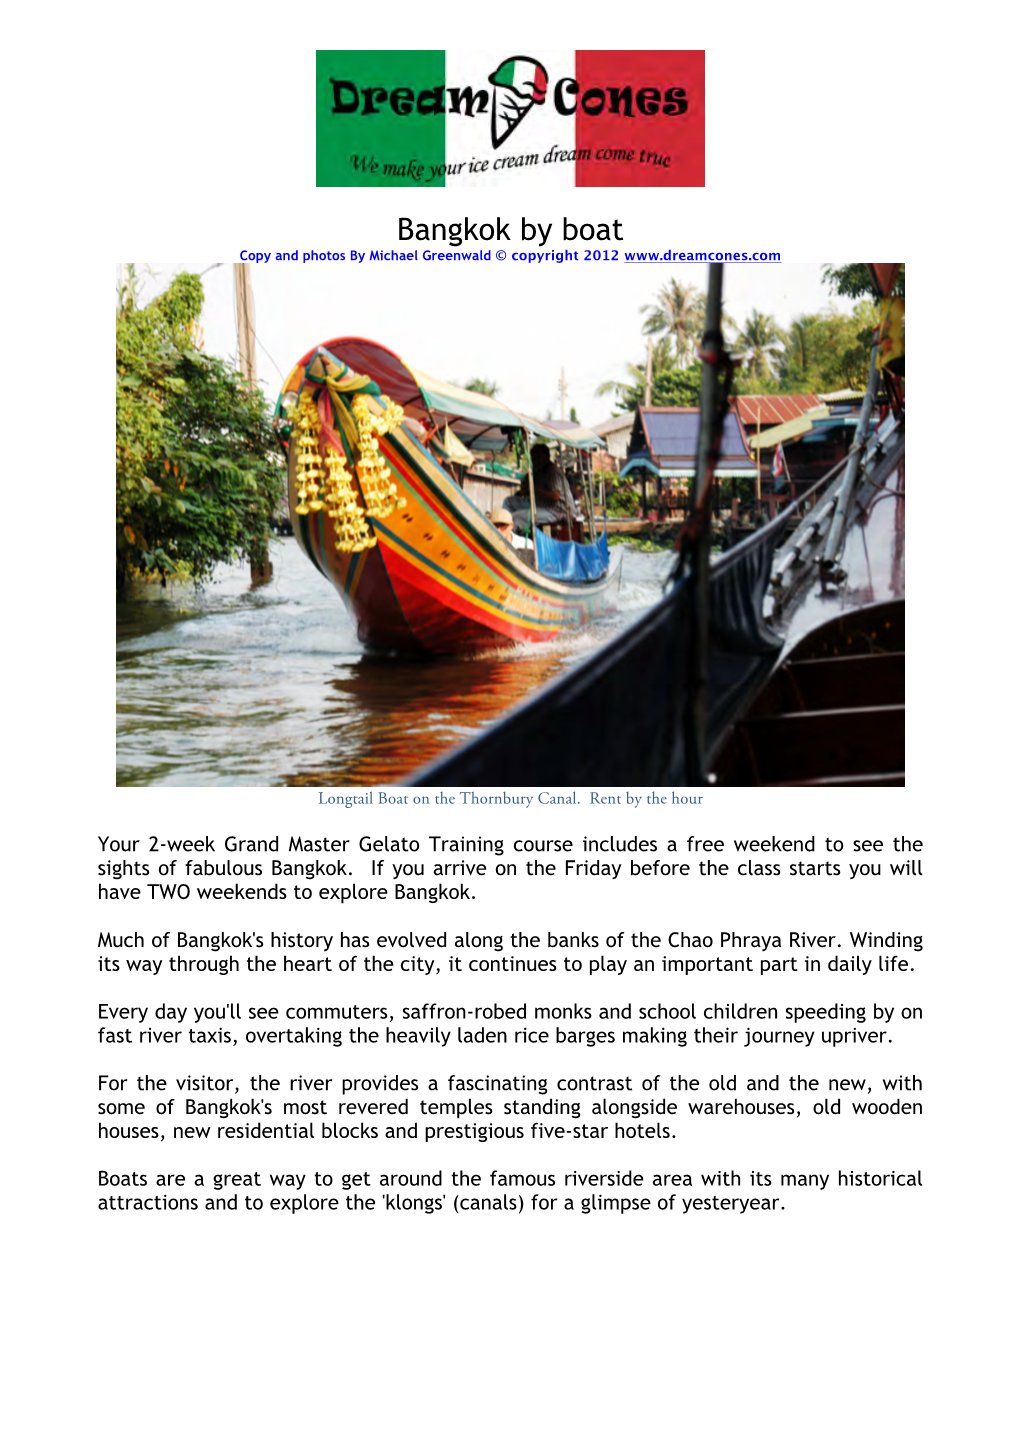 Bangkok by Boat Copy and Photos by Michael Greenwald © Copyright 2012